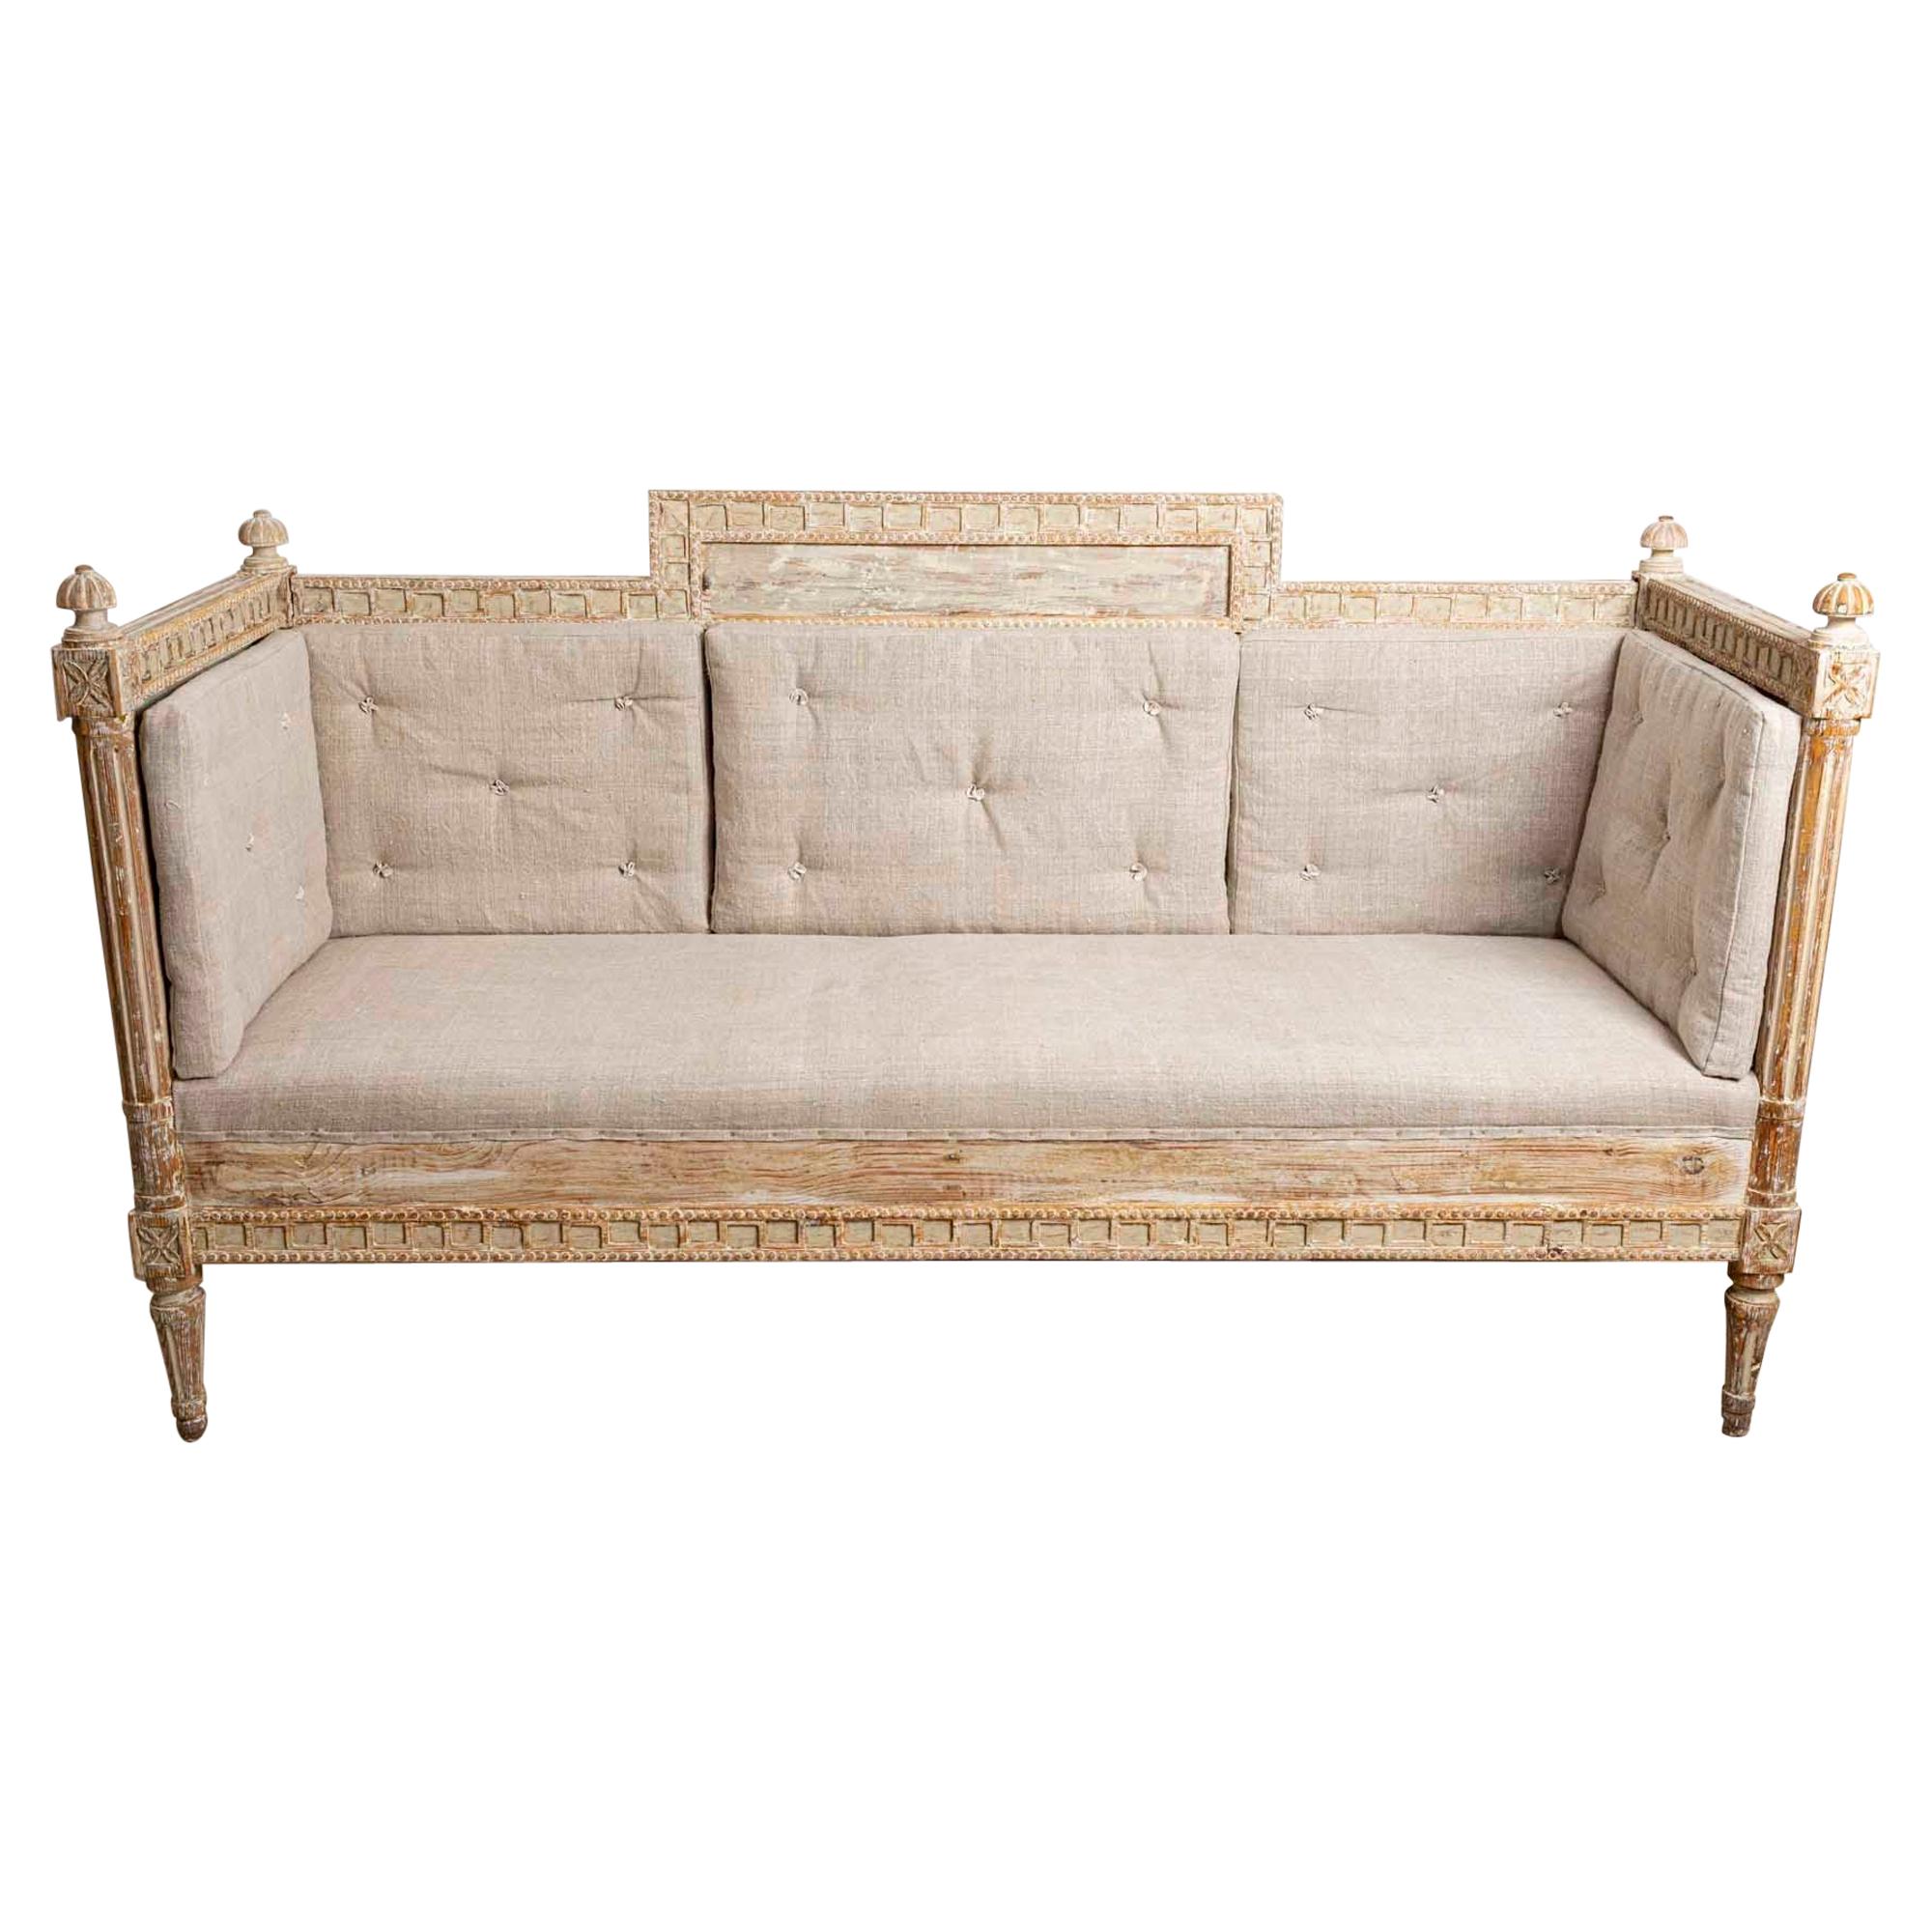 19th Century Three-Seat High Backed Painted Swedish Sofa, Decorative Detail